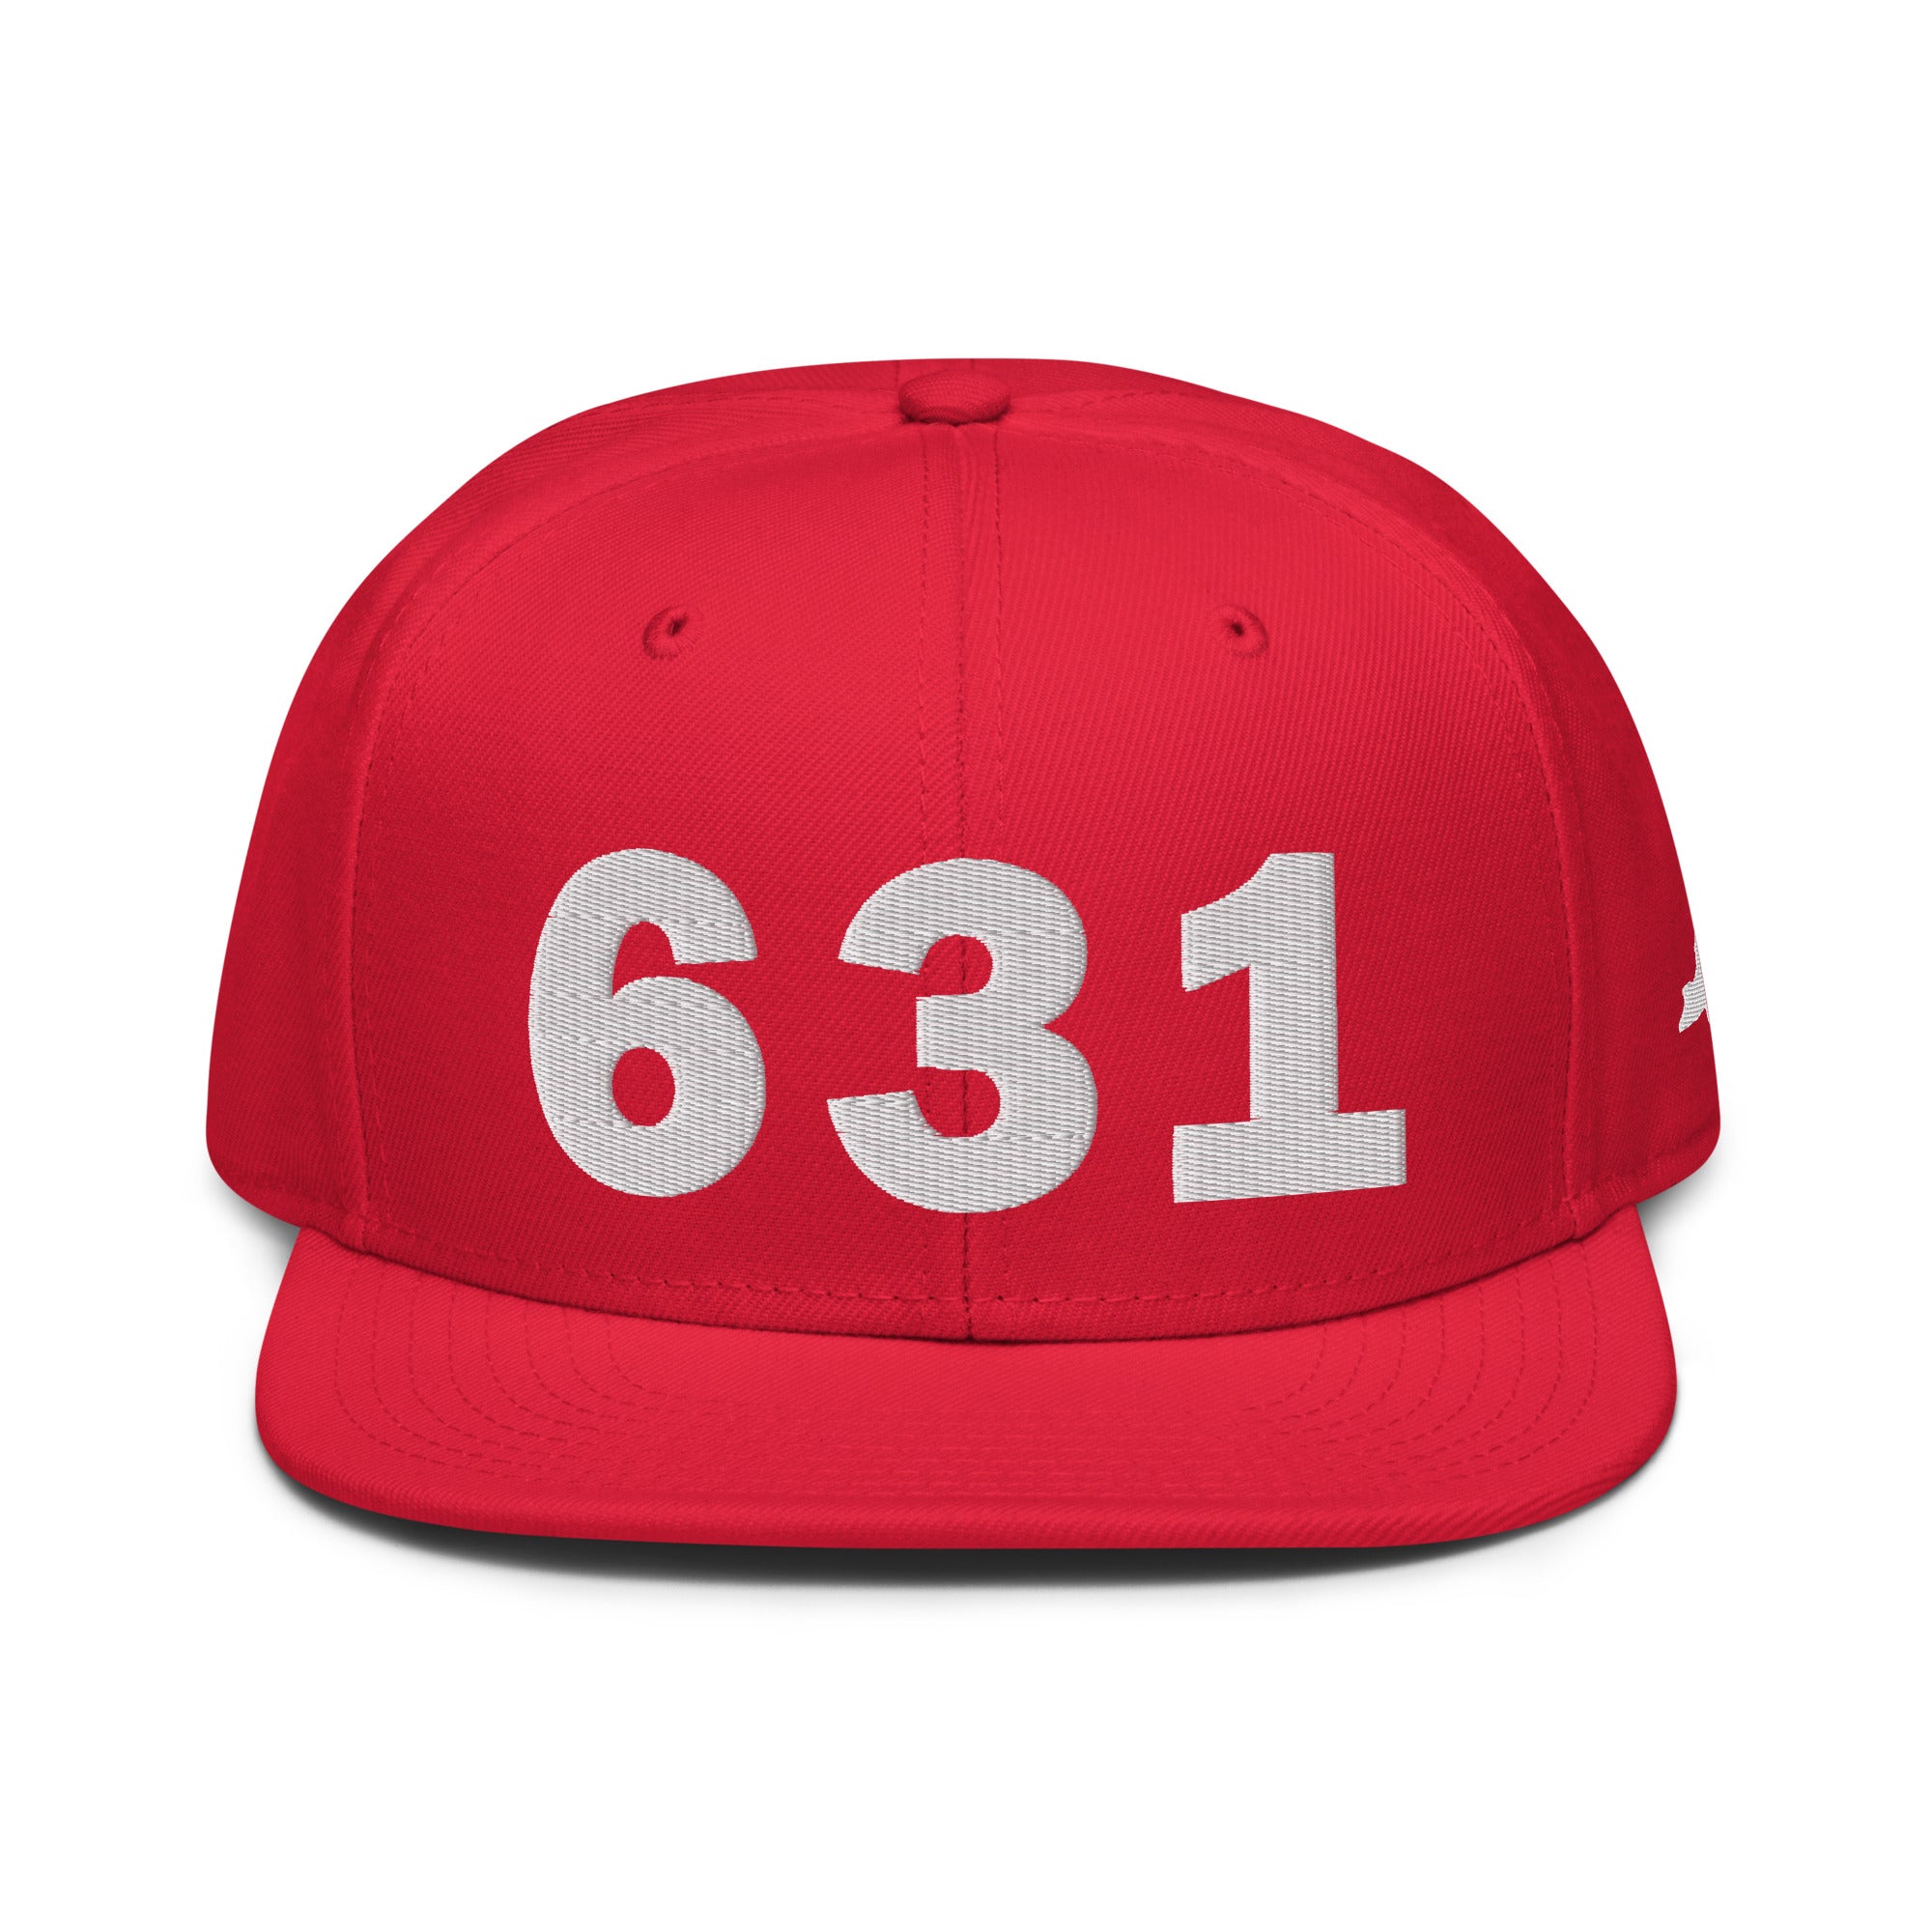 Supreme Hats By Supreme New York Snapback Hat Navy - Baseball Cap